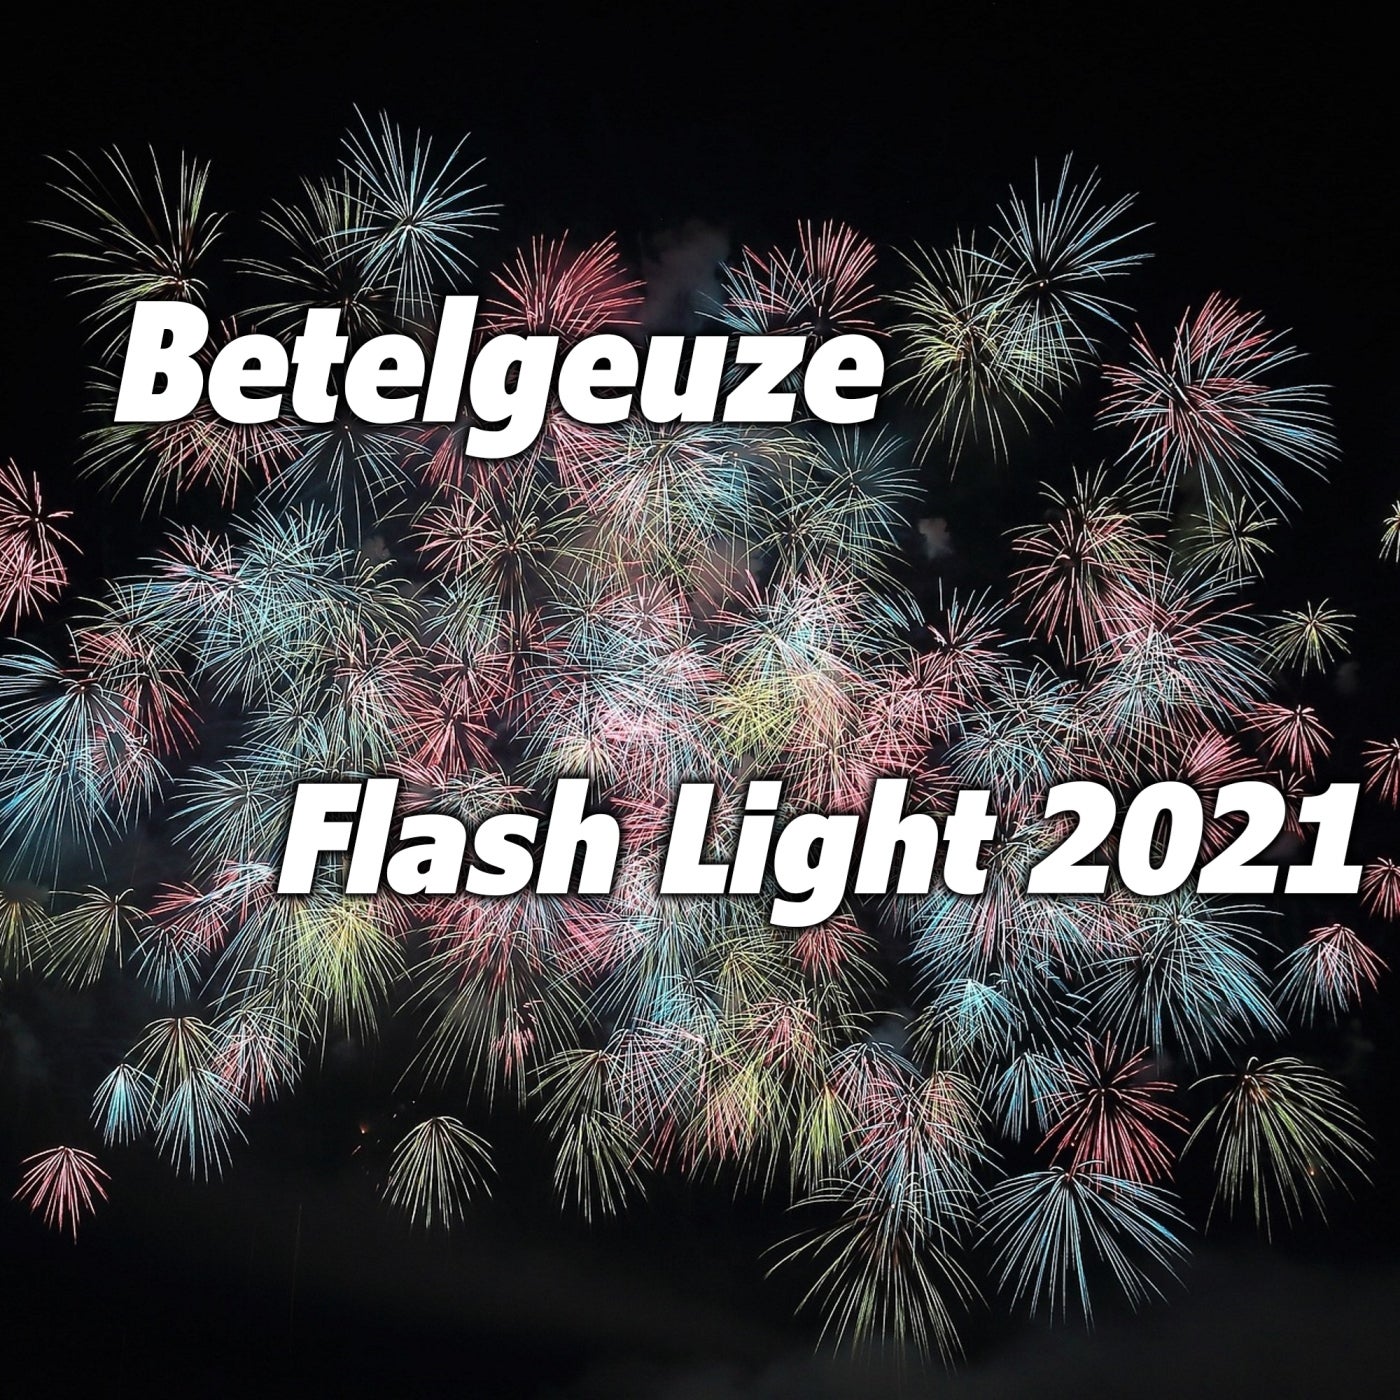 Flash Light 2021